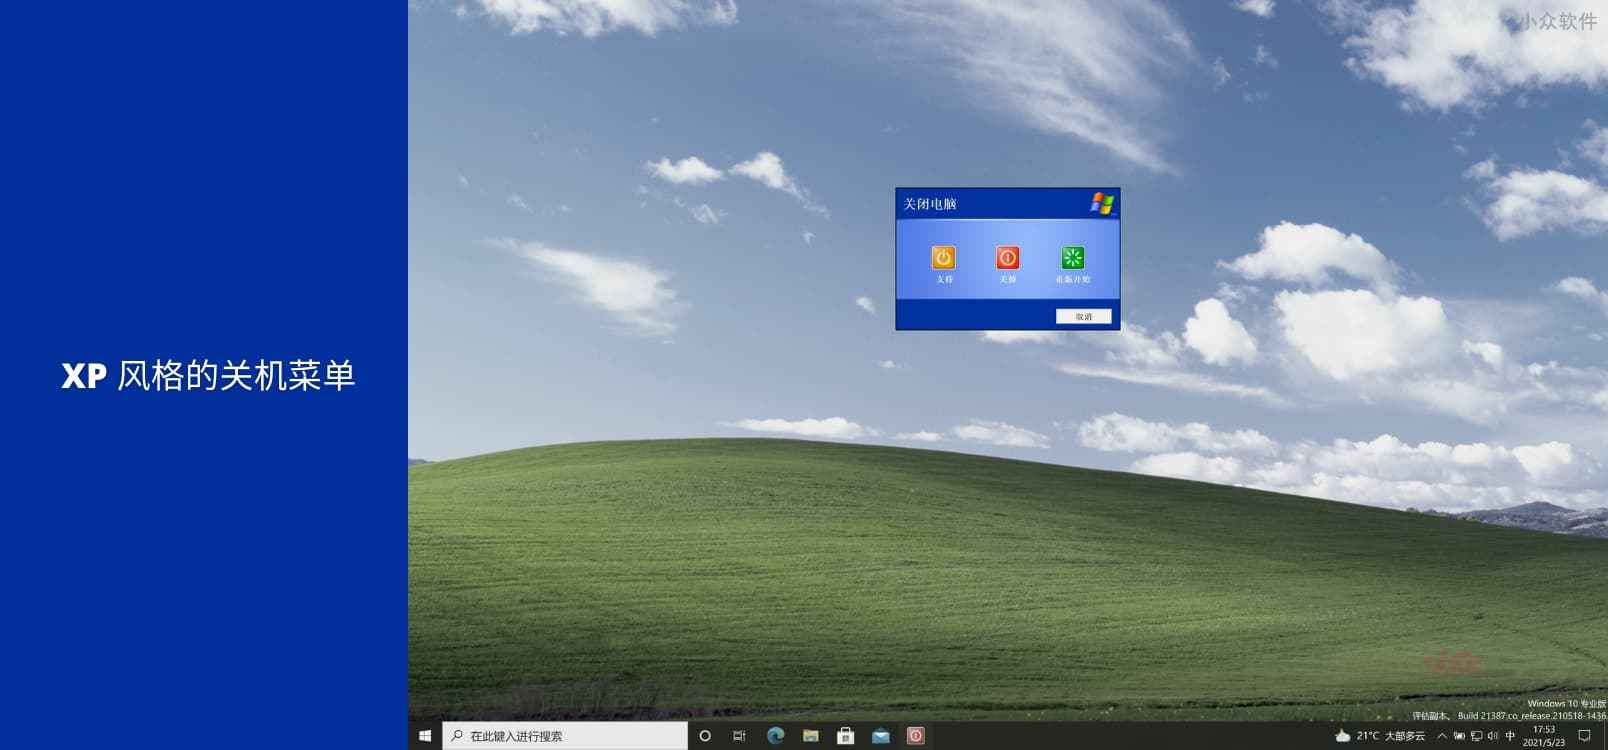 XP Shutdown / Logoff Menu – Windows XP 风格的关机菜单